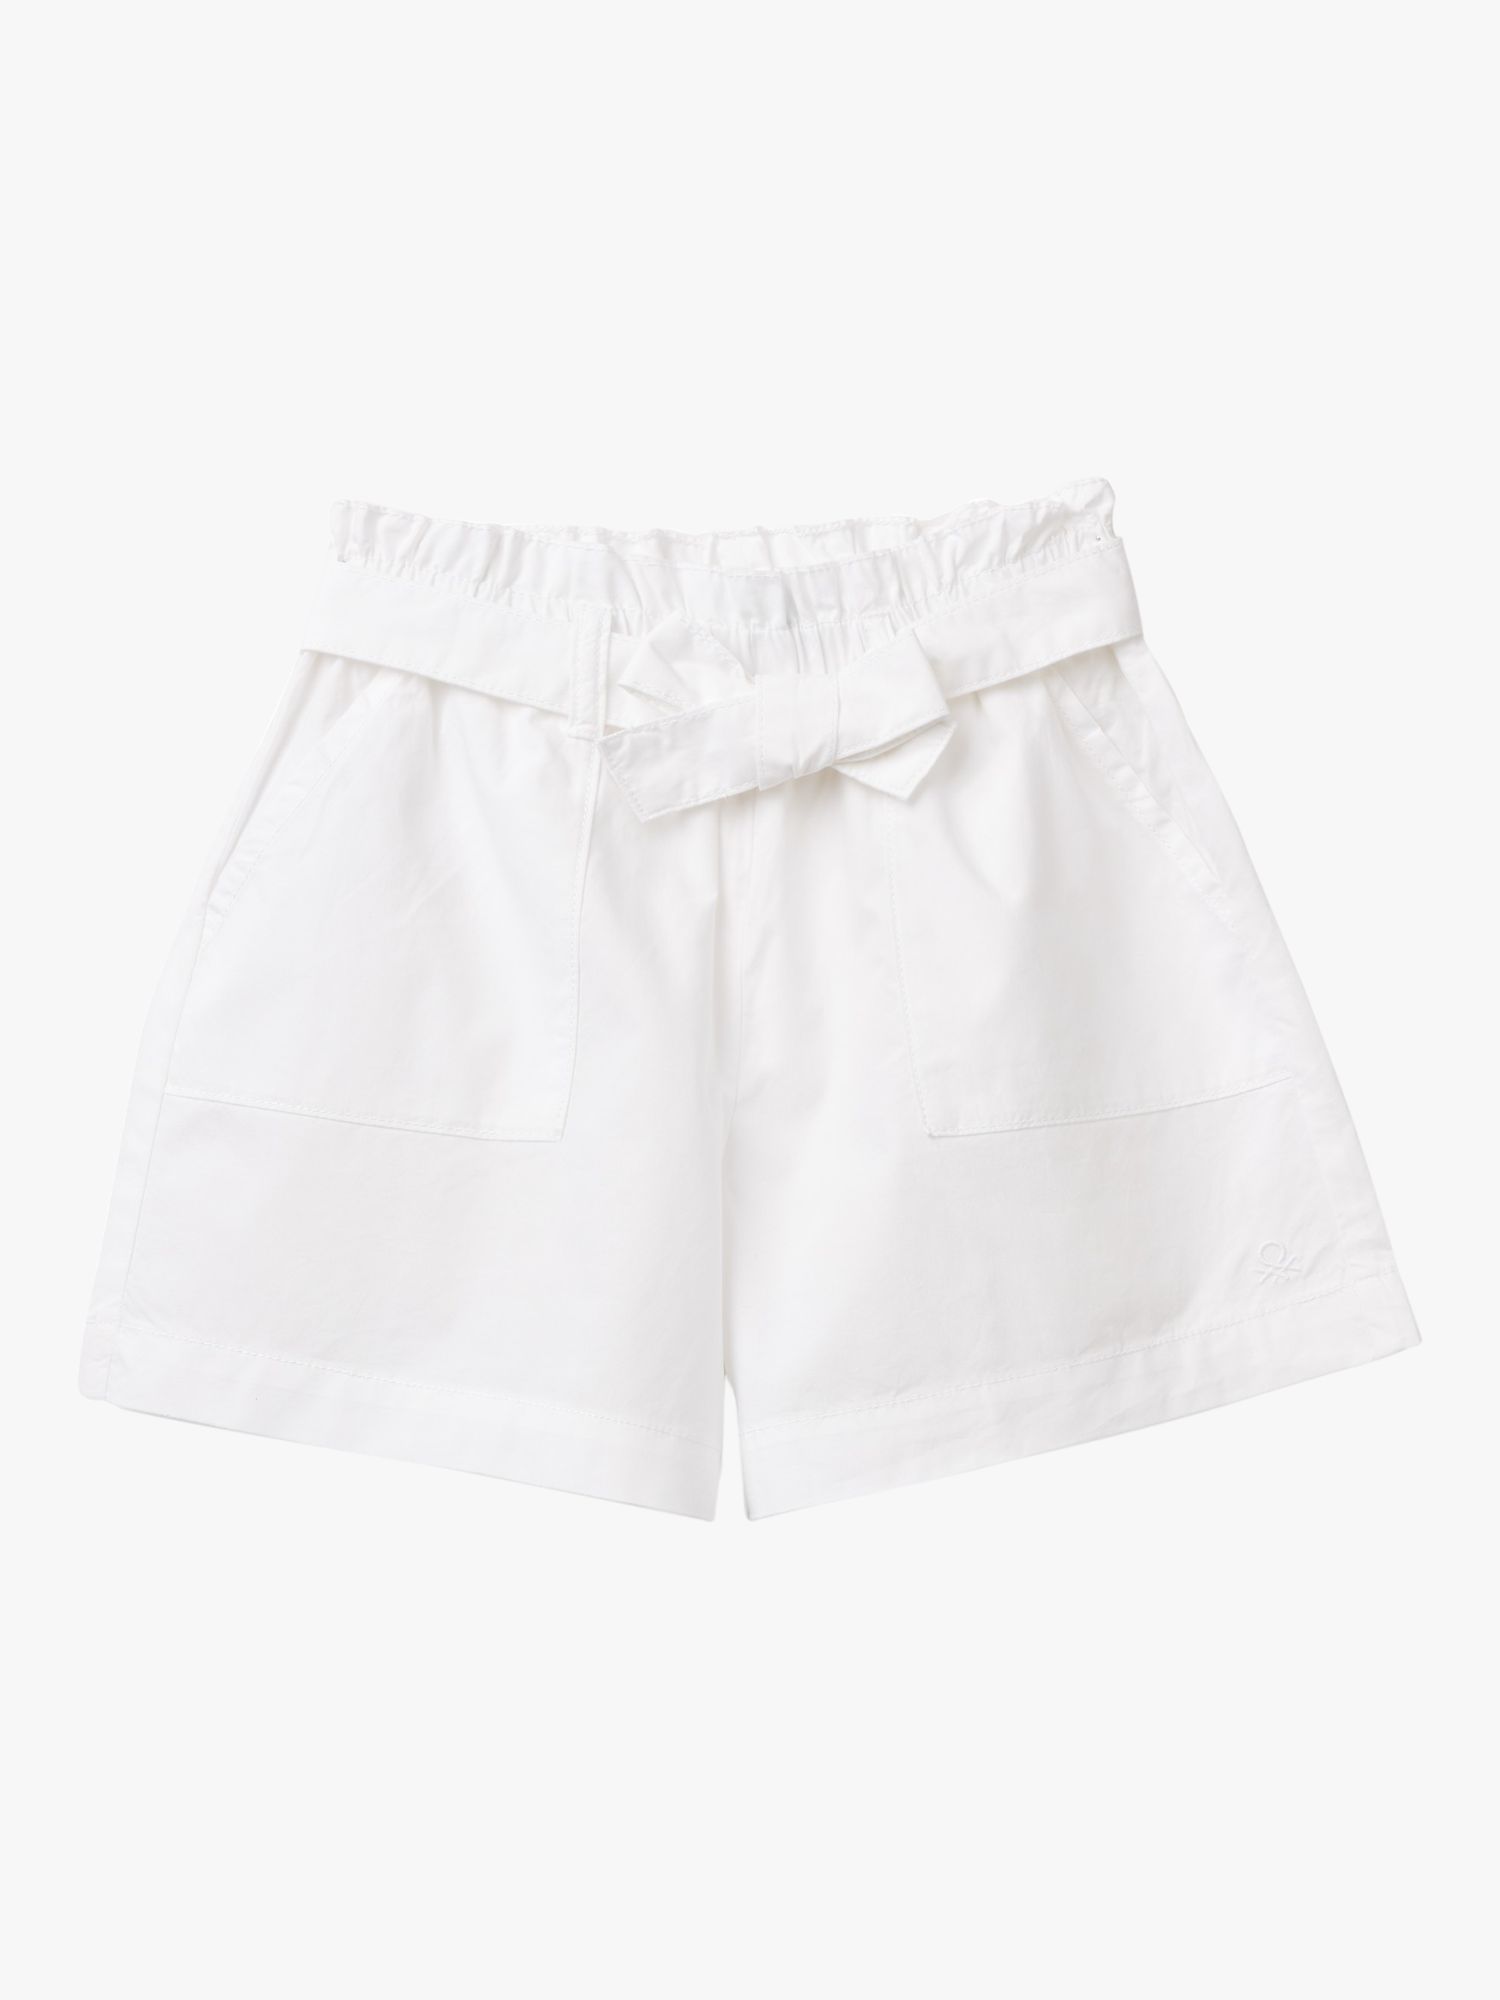 Benetton Kids' Paperbag Tie Waist Shorts, Optical White, 6-7 years